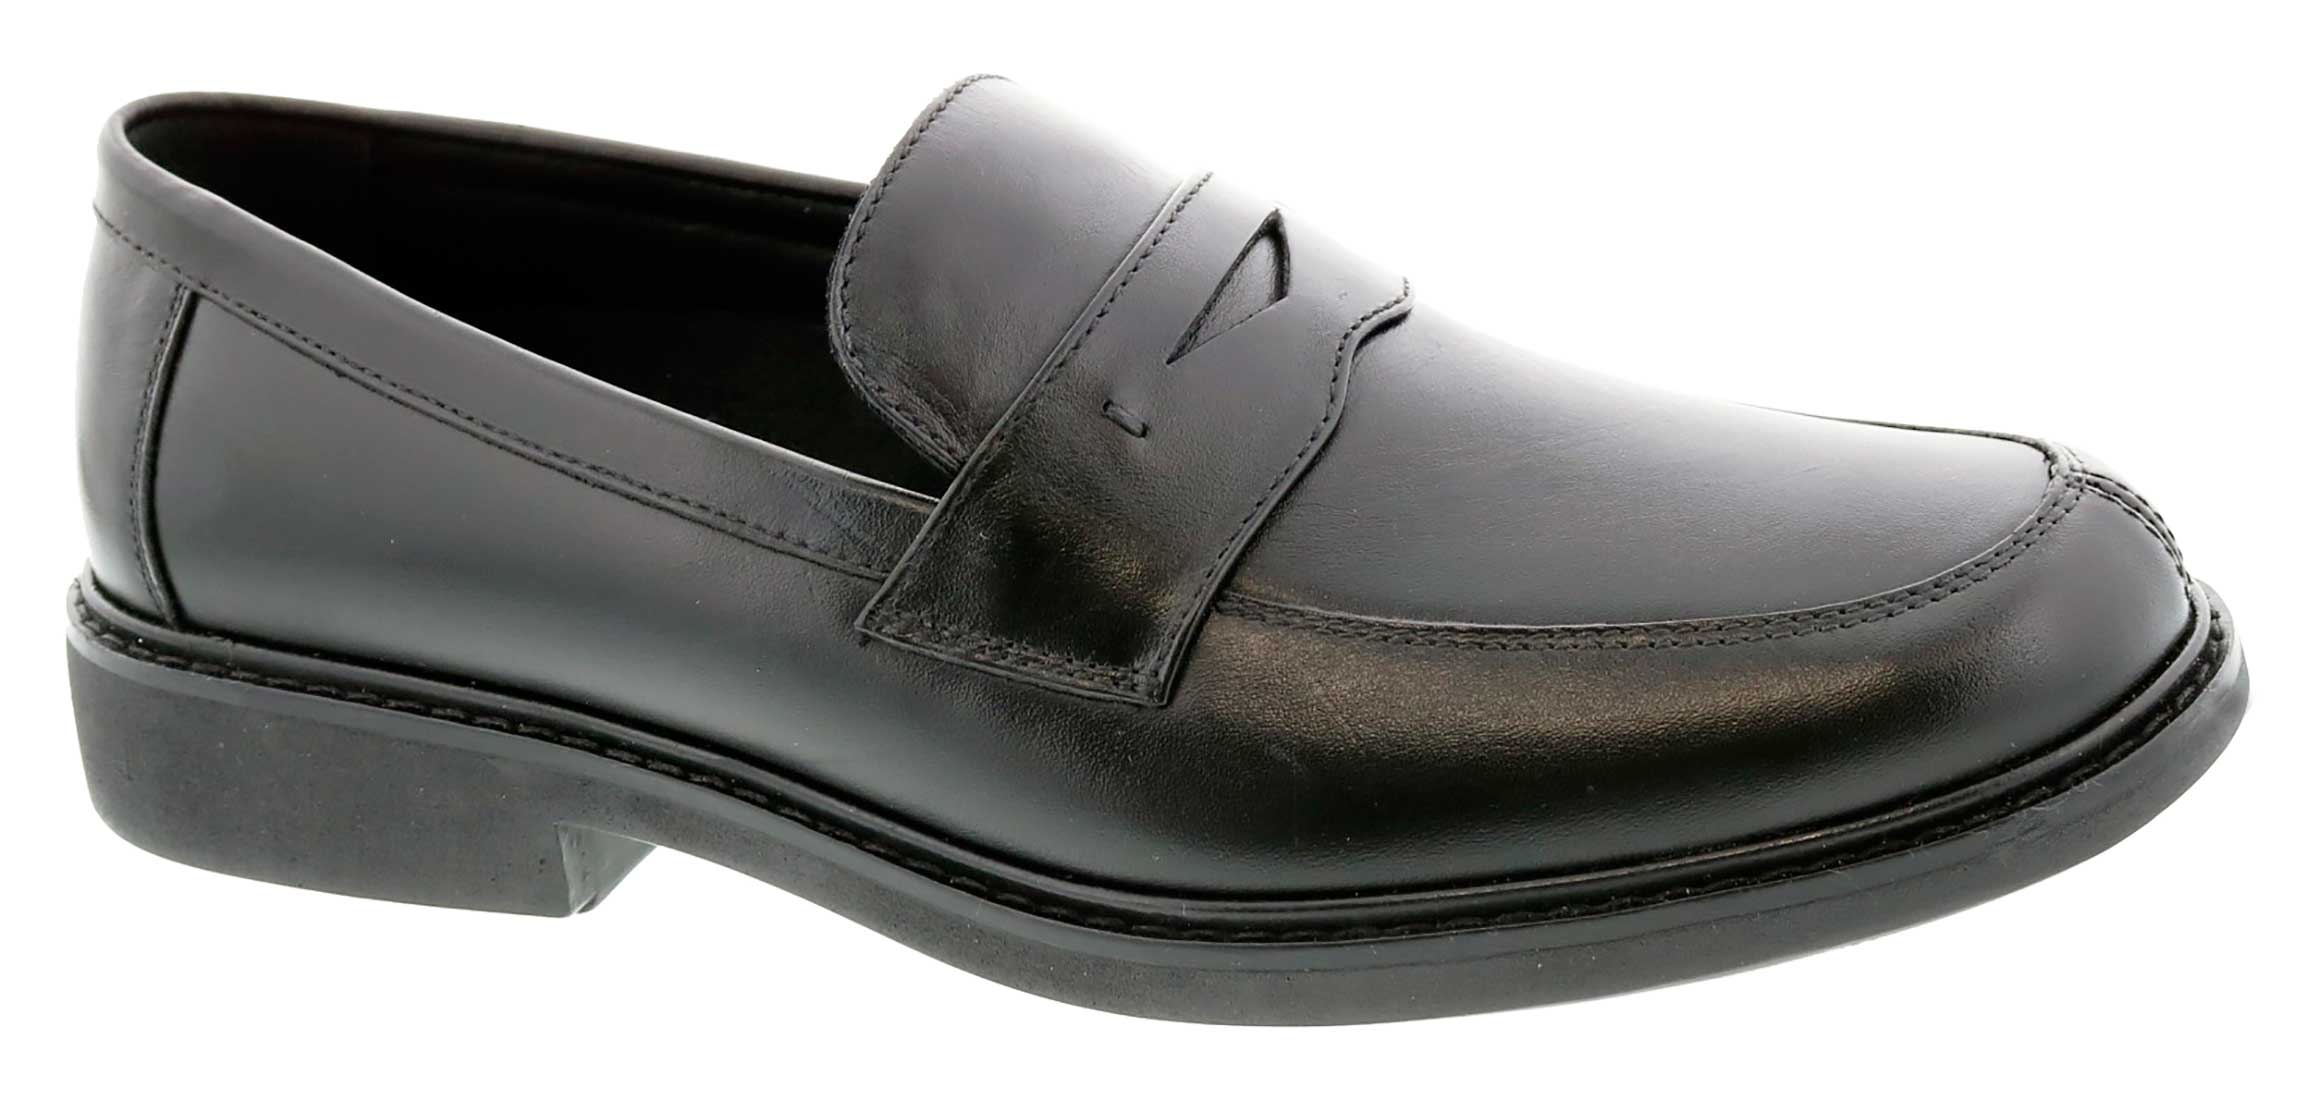 drew shoes essex 43950 - men's casual dress shoe - comfort orthopedic  diabetic shoe - extra depth for orthotics - extra wide